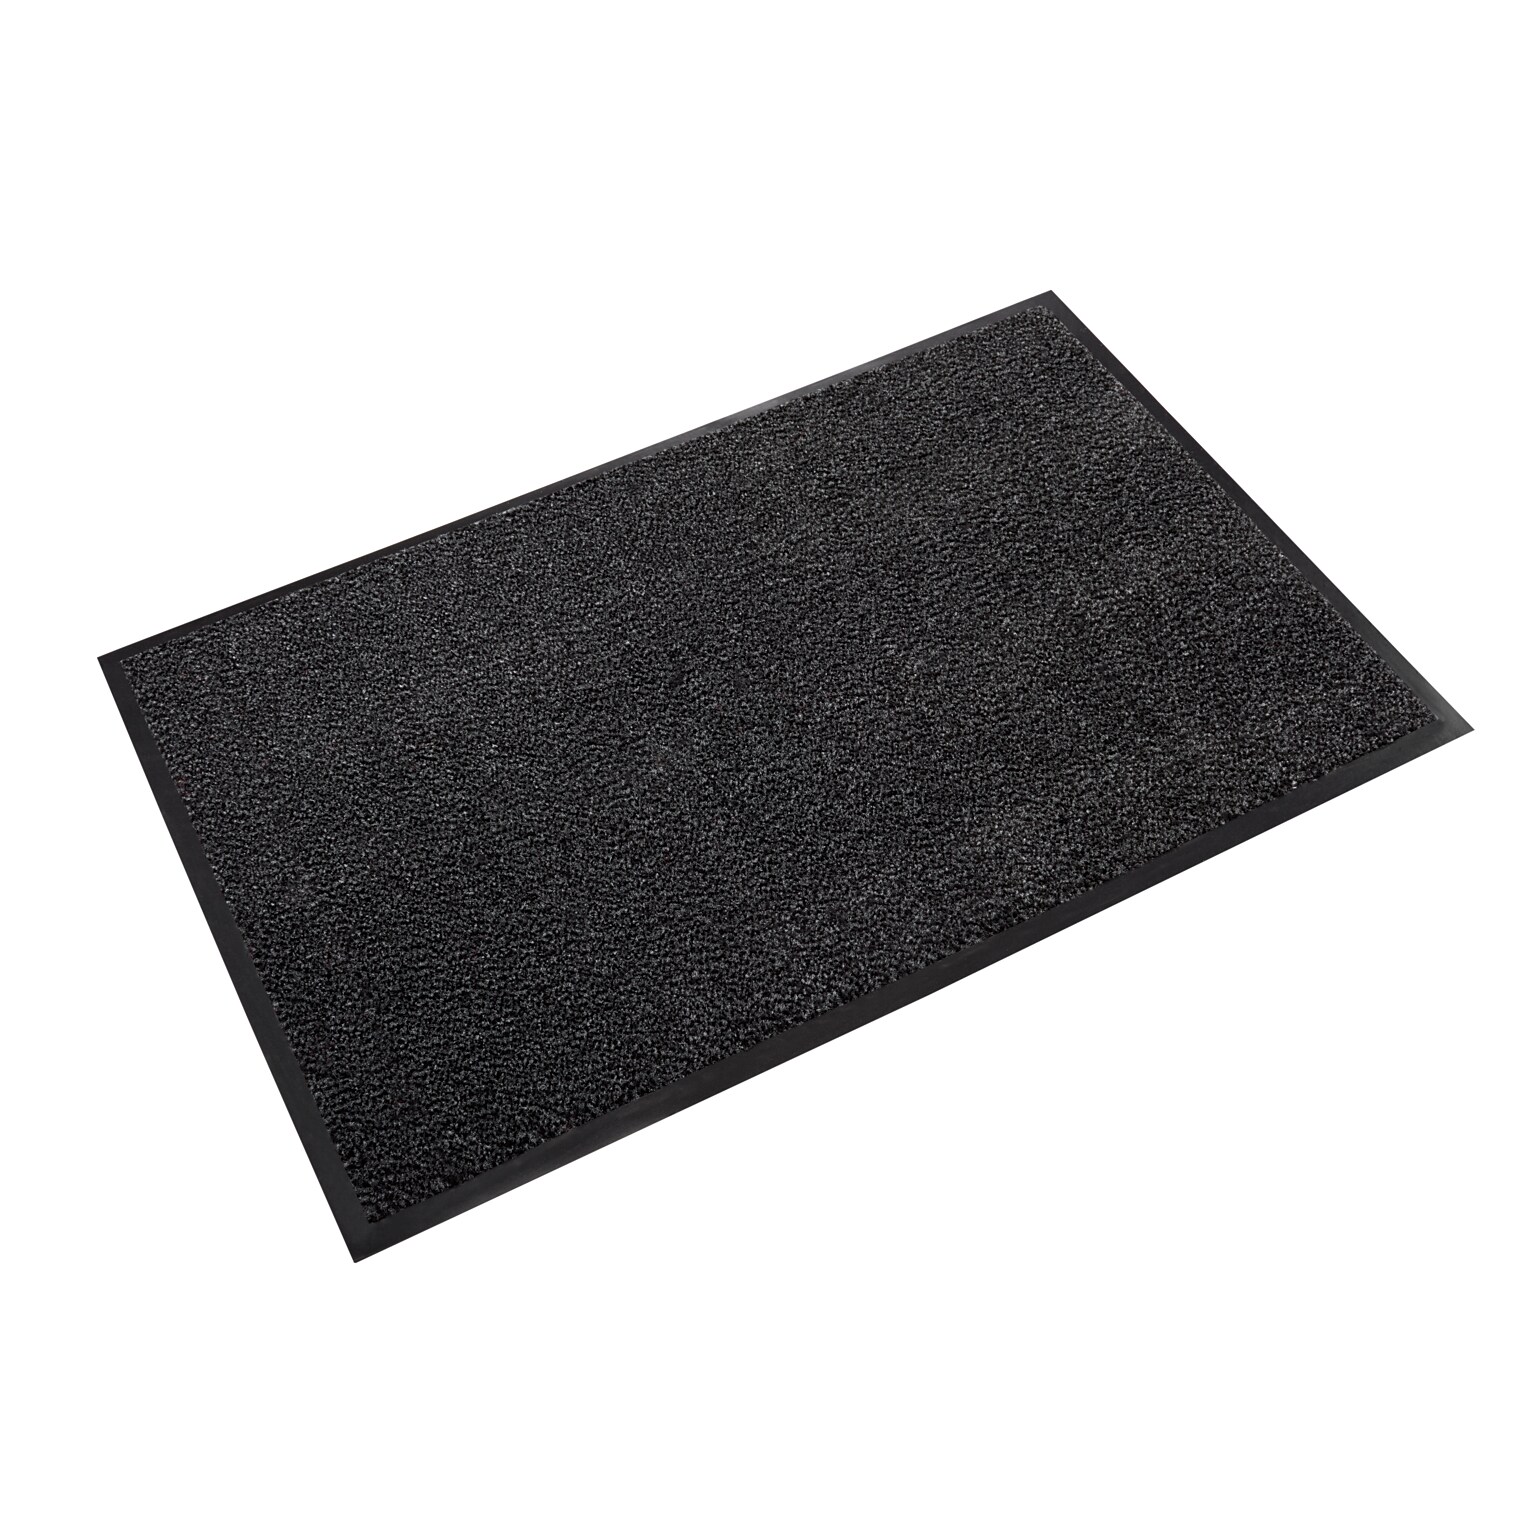 Crown Dust-Star Microfiber Wiper Floor Mat, 48 x 72, Charcoal (CWNDS0046CH)